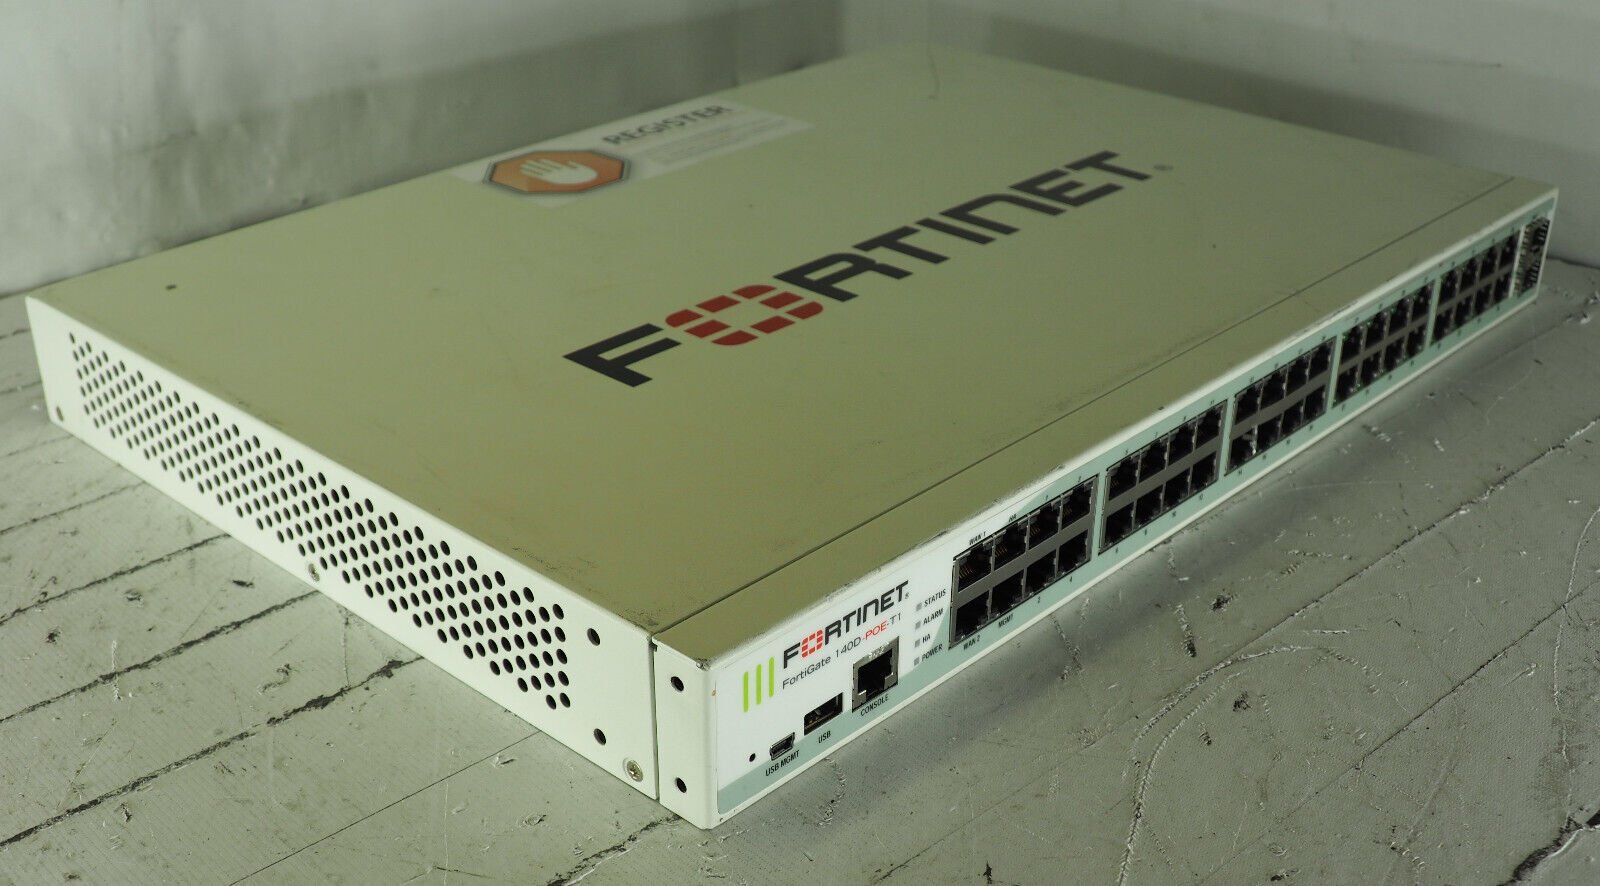 Fortinet FG-140D-POE-T1 Fortigate 36-Port SSL POE Firewall P14095-02-10